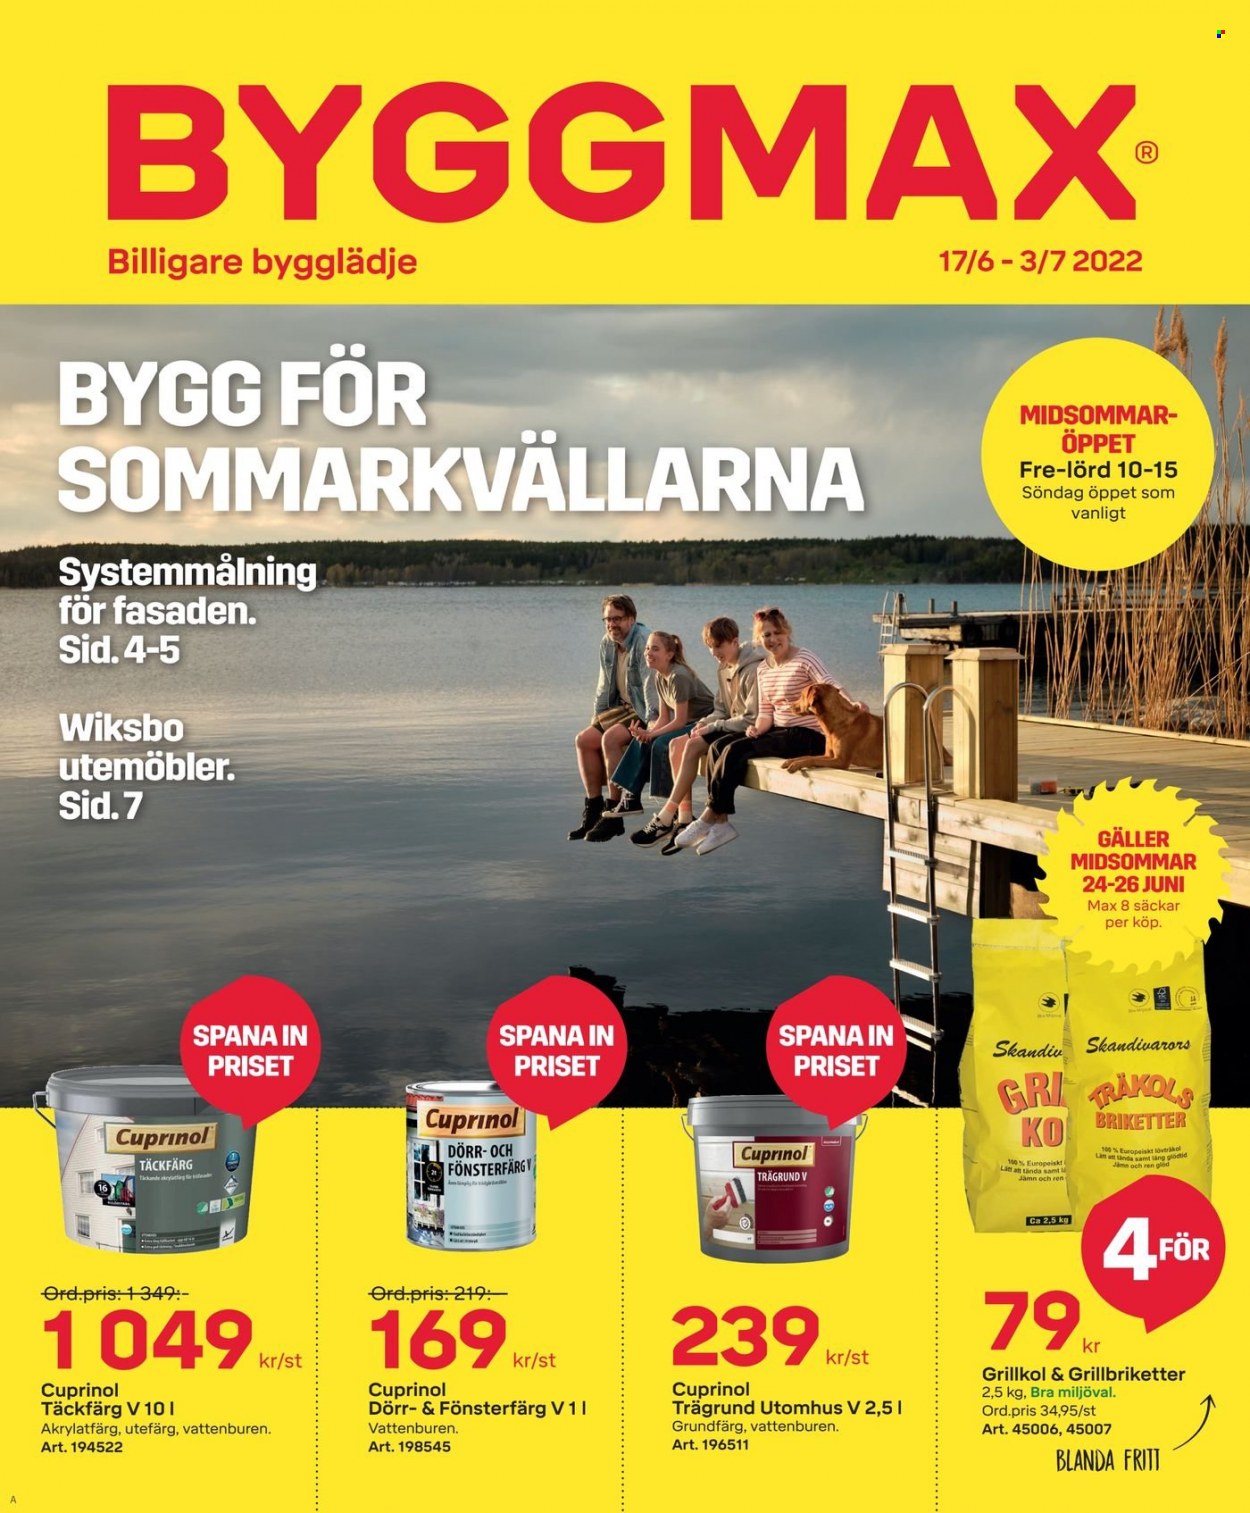 ByggMax reklamblad - 17/6 2022 - 3/7 2022. Sida 1.